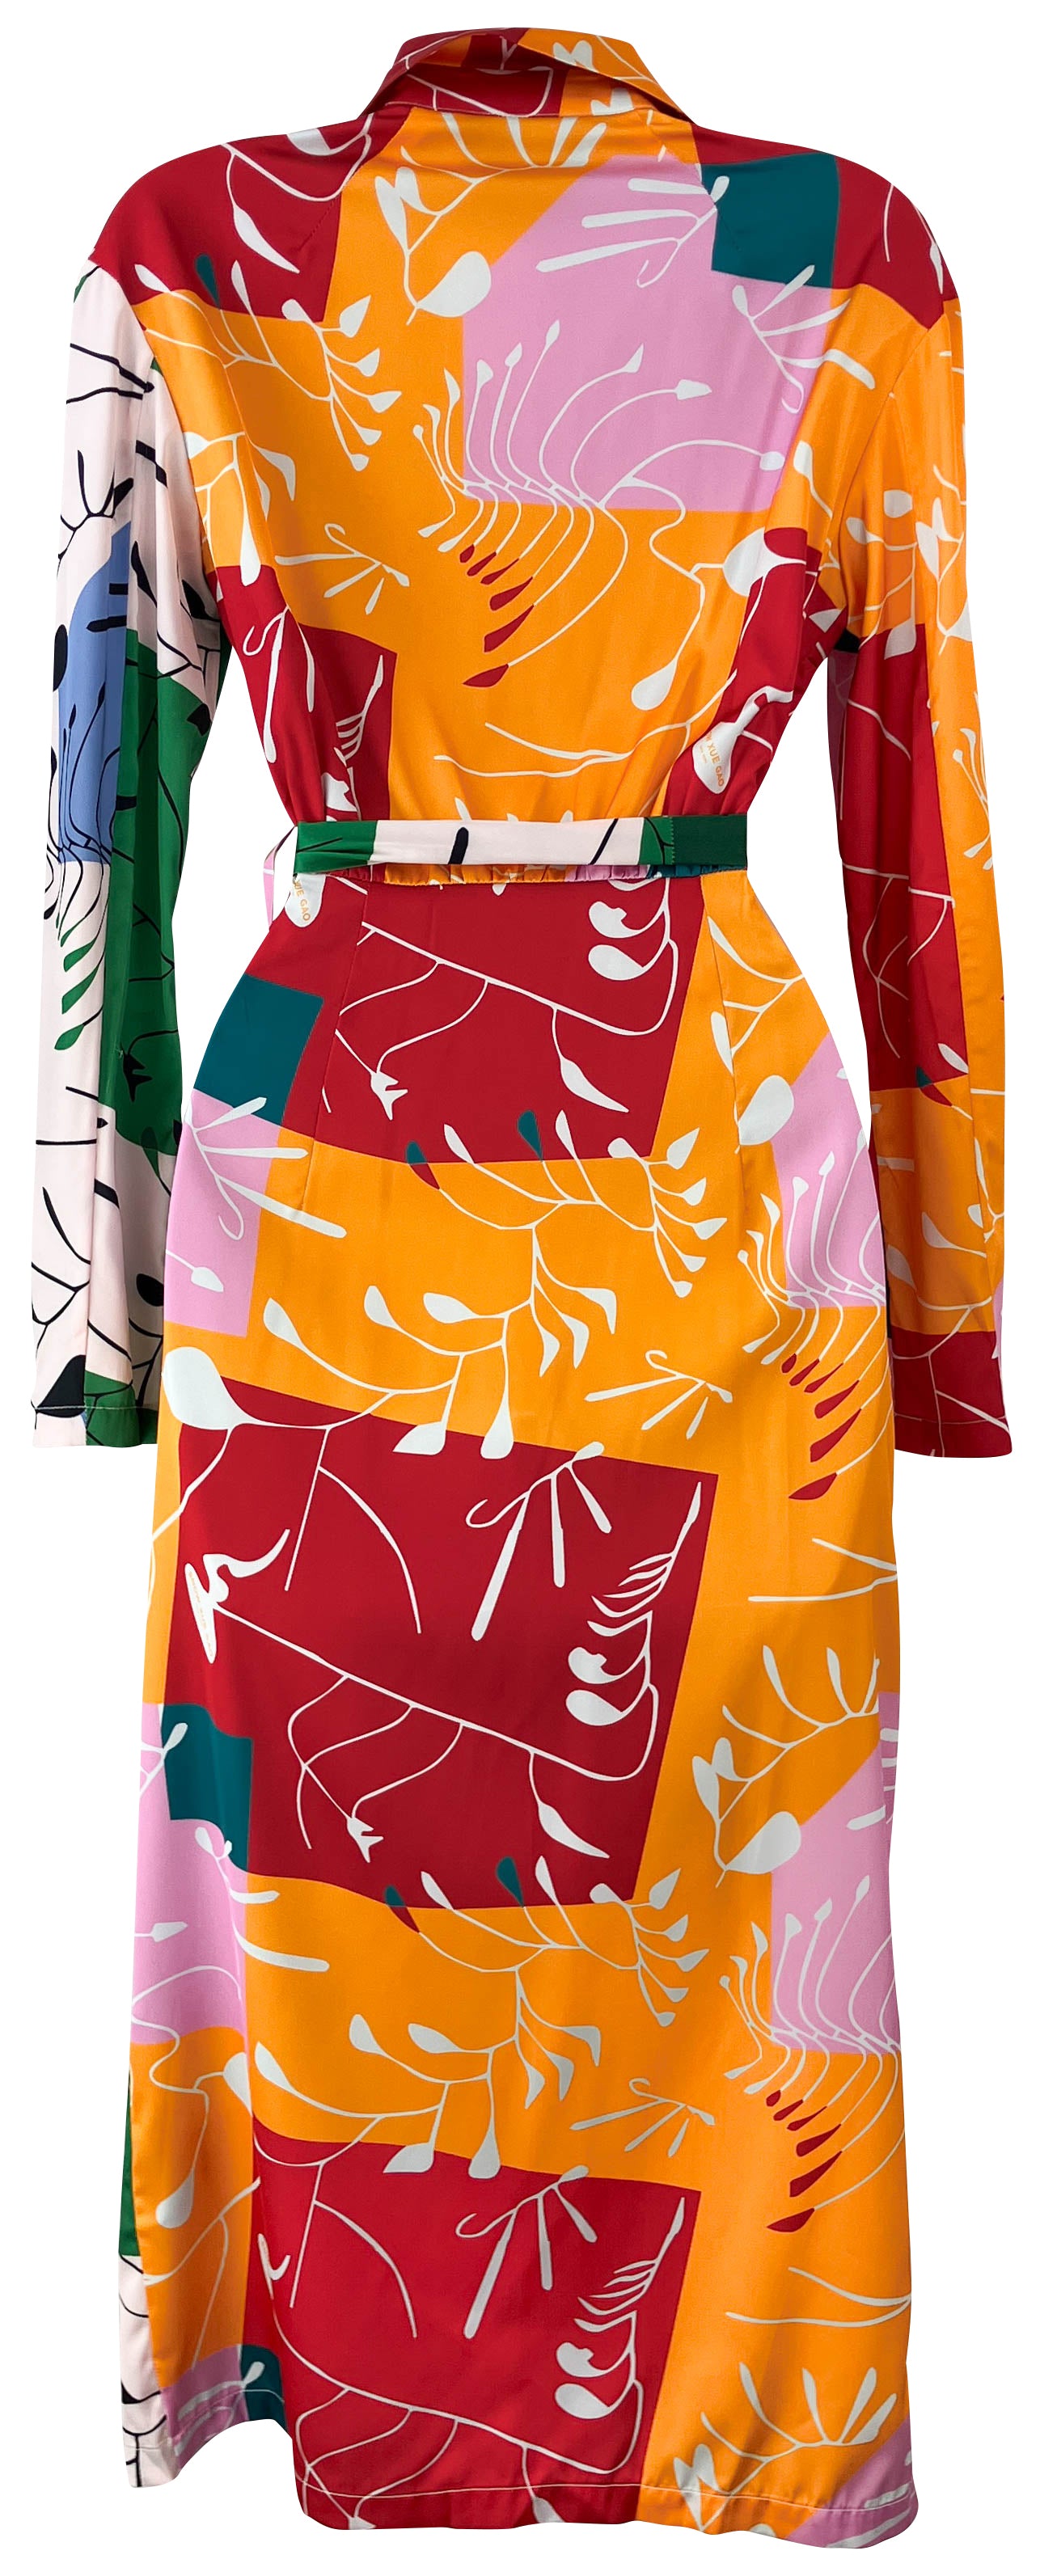 Snow Xue Gao Asymmetric Wrap Dress in Orange/Green - Discounts on Snow Xue Gao at UAL